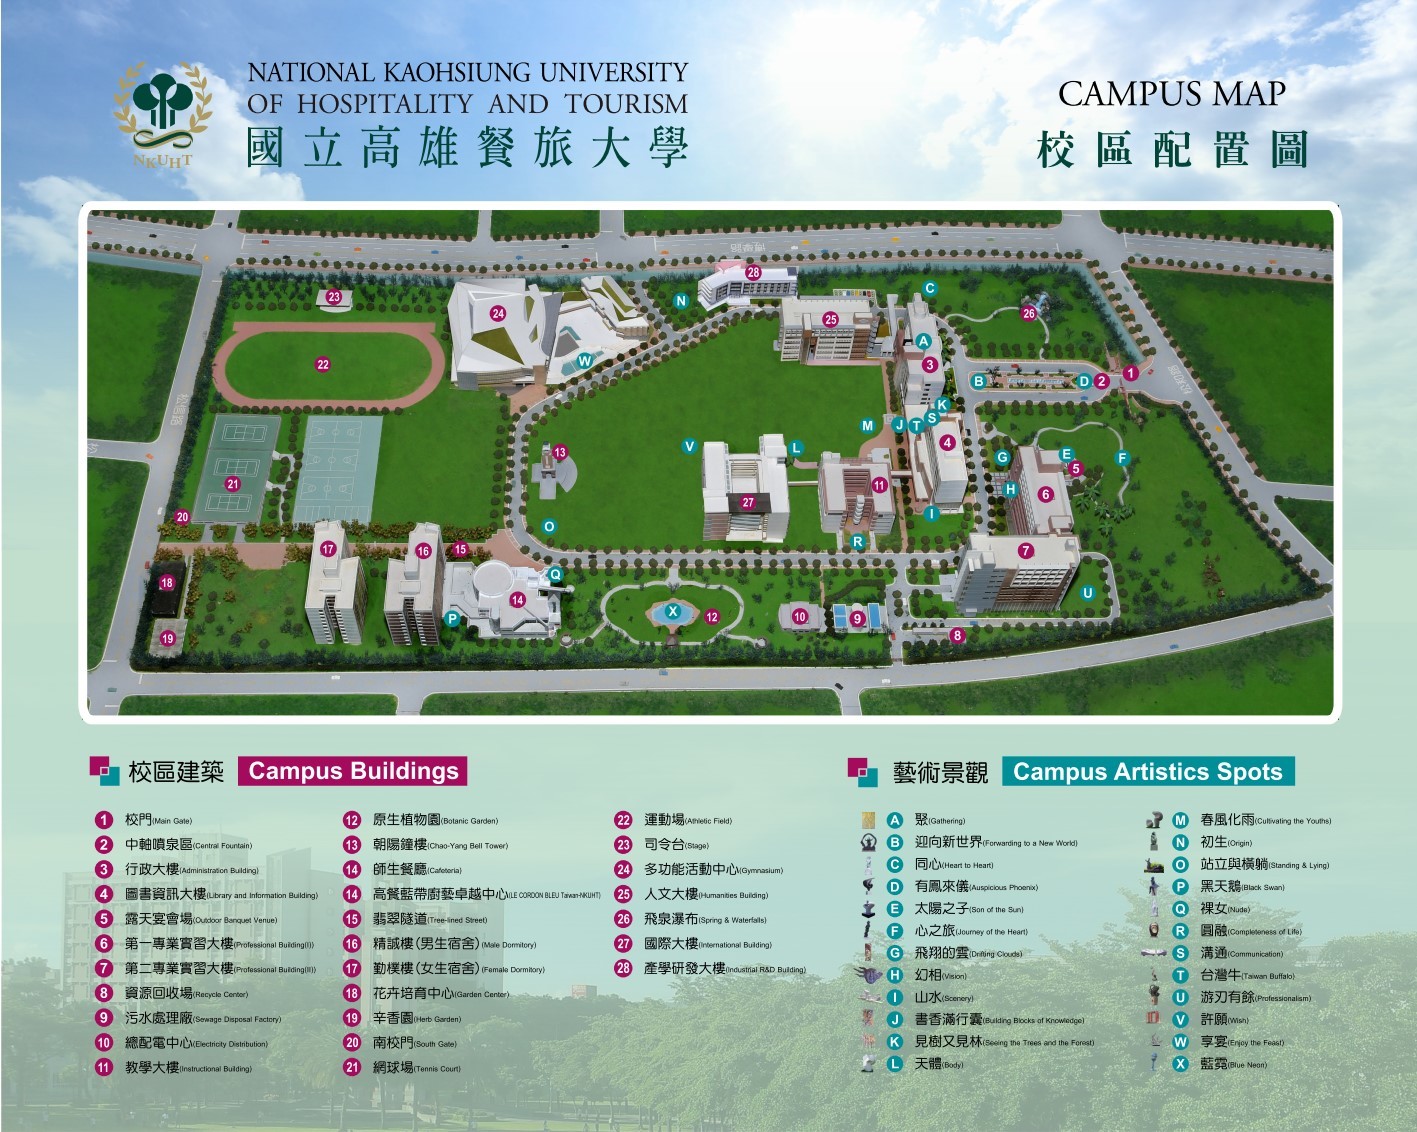 Campus Map, Including Campus Buildings and Campus Artistics Spots